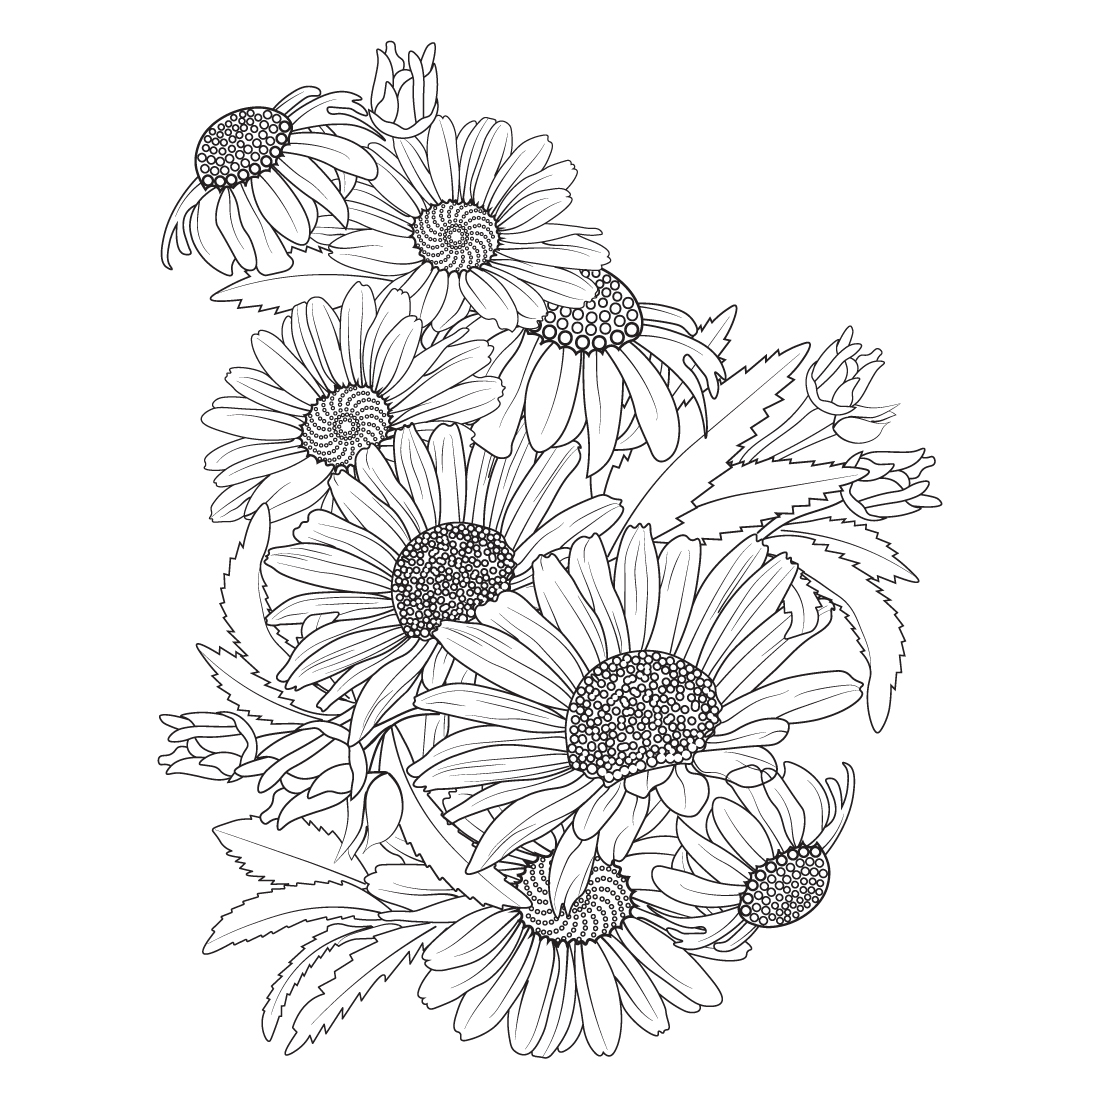 Daisy flower drawing realistic botanical daisy flower line art, gerbera daisy flower pencil art, preview image.